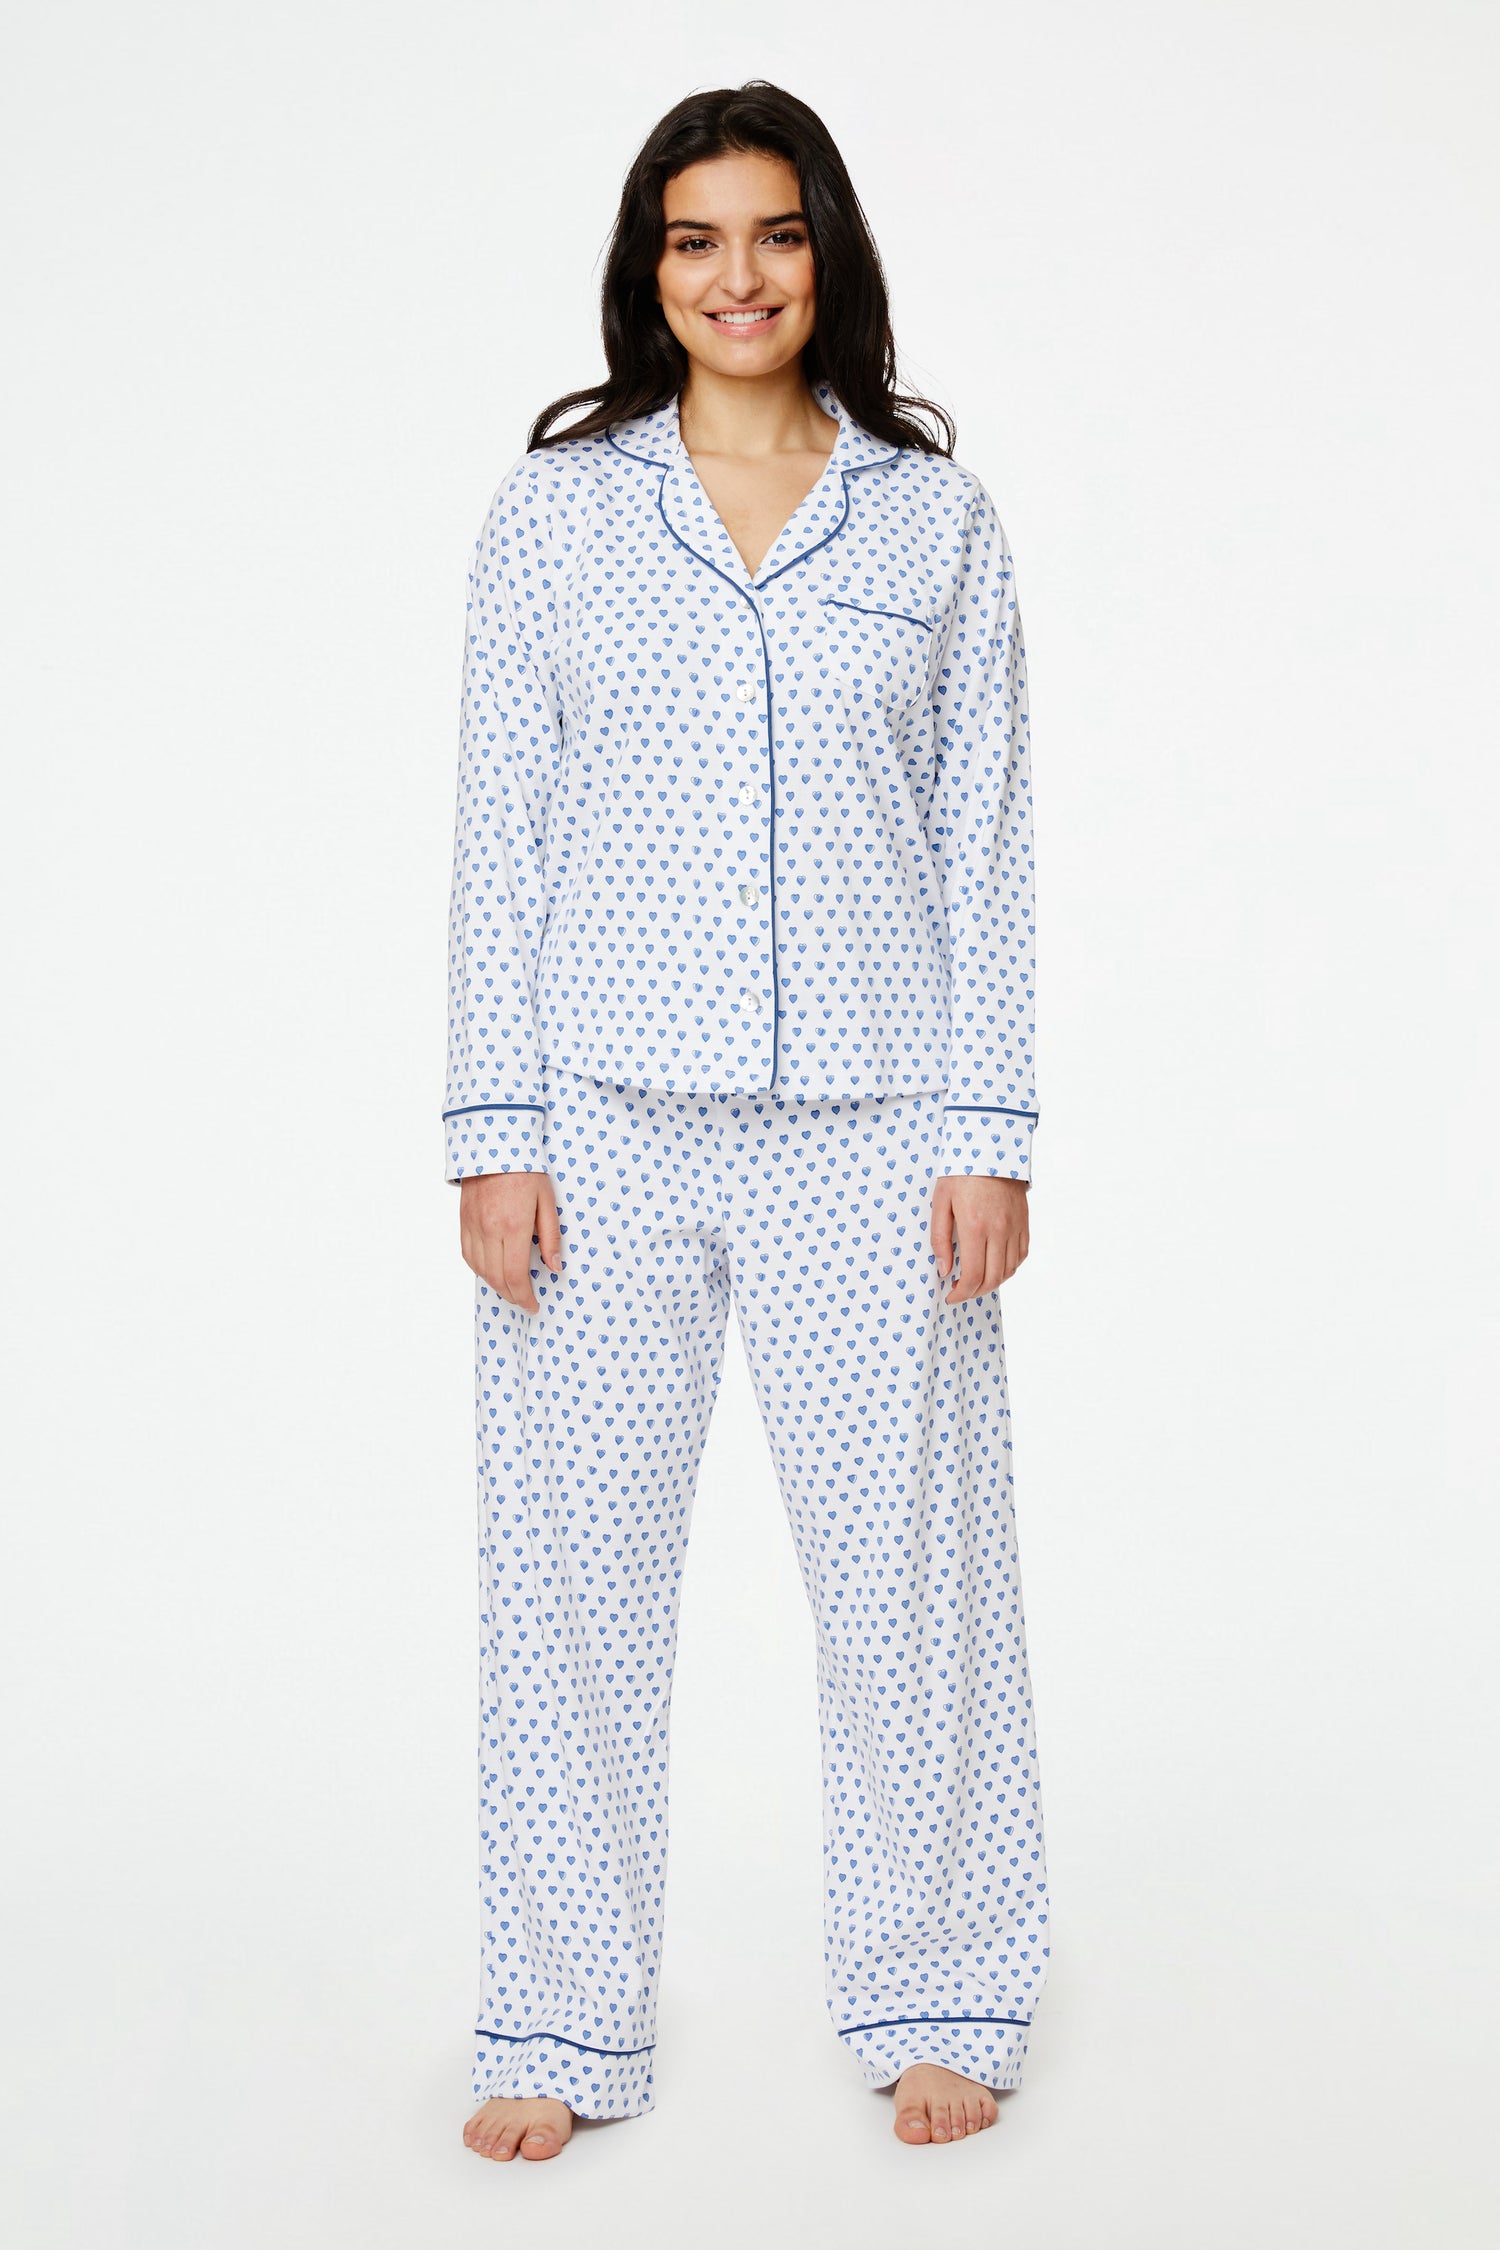 Roller Rabbit Blue Hearts Long Sleeve Polo Pajamas